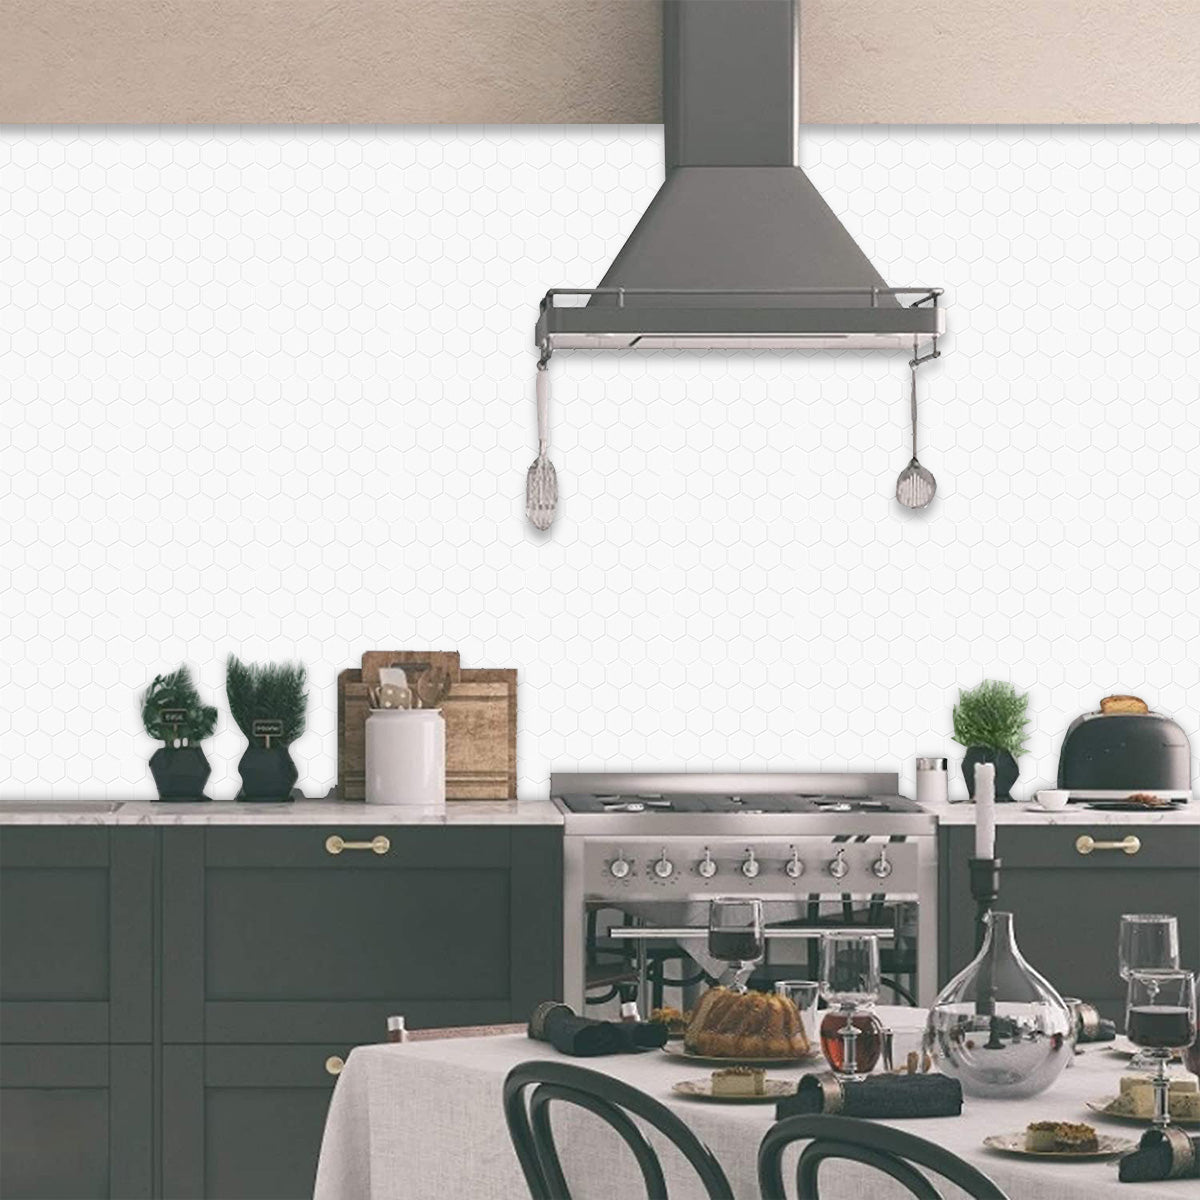 White hexagon peel and stick tiles in a kitchen